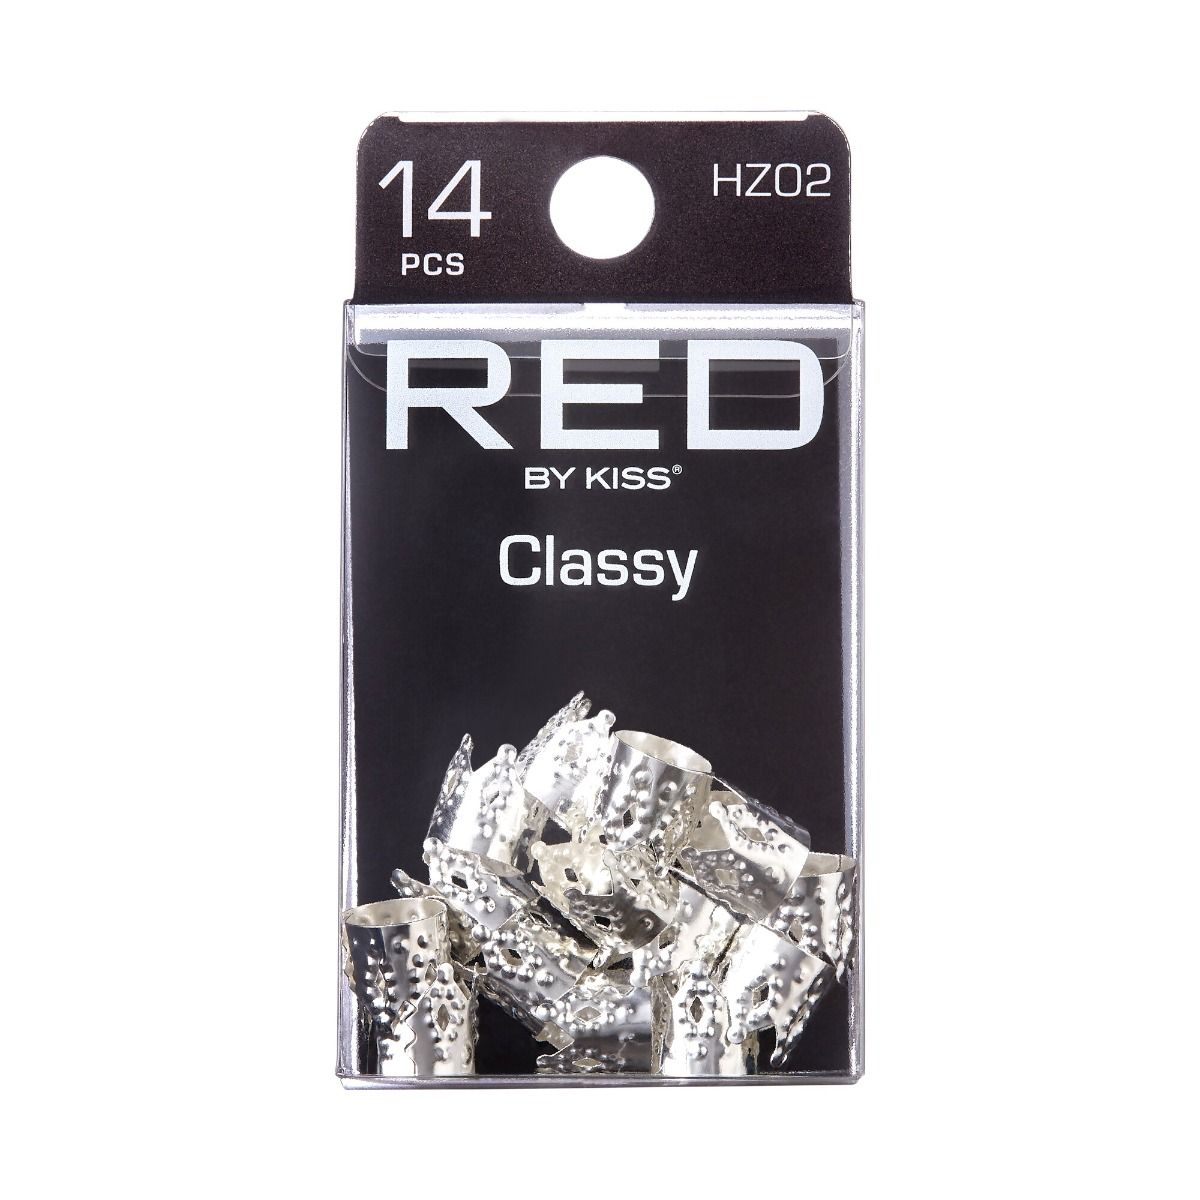 Red by Kiss 14pcs Classy Braid Charm #HZ02